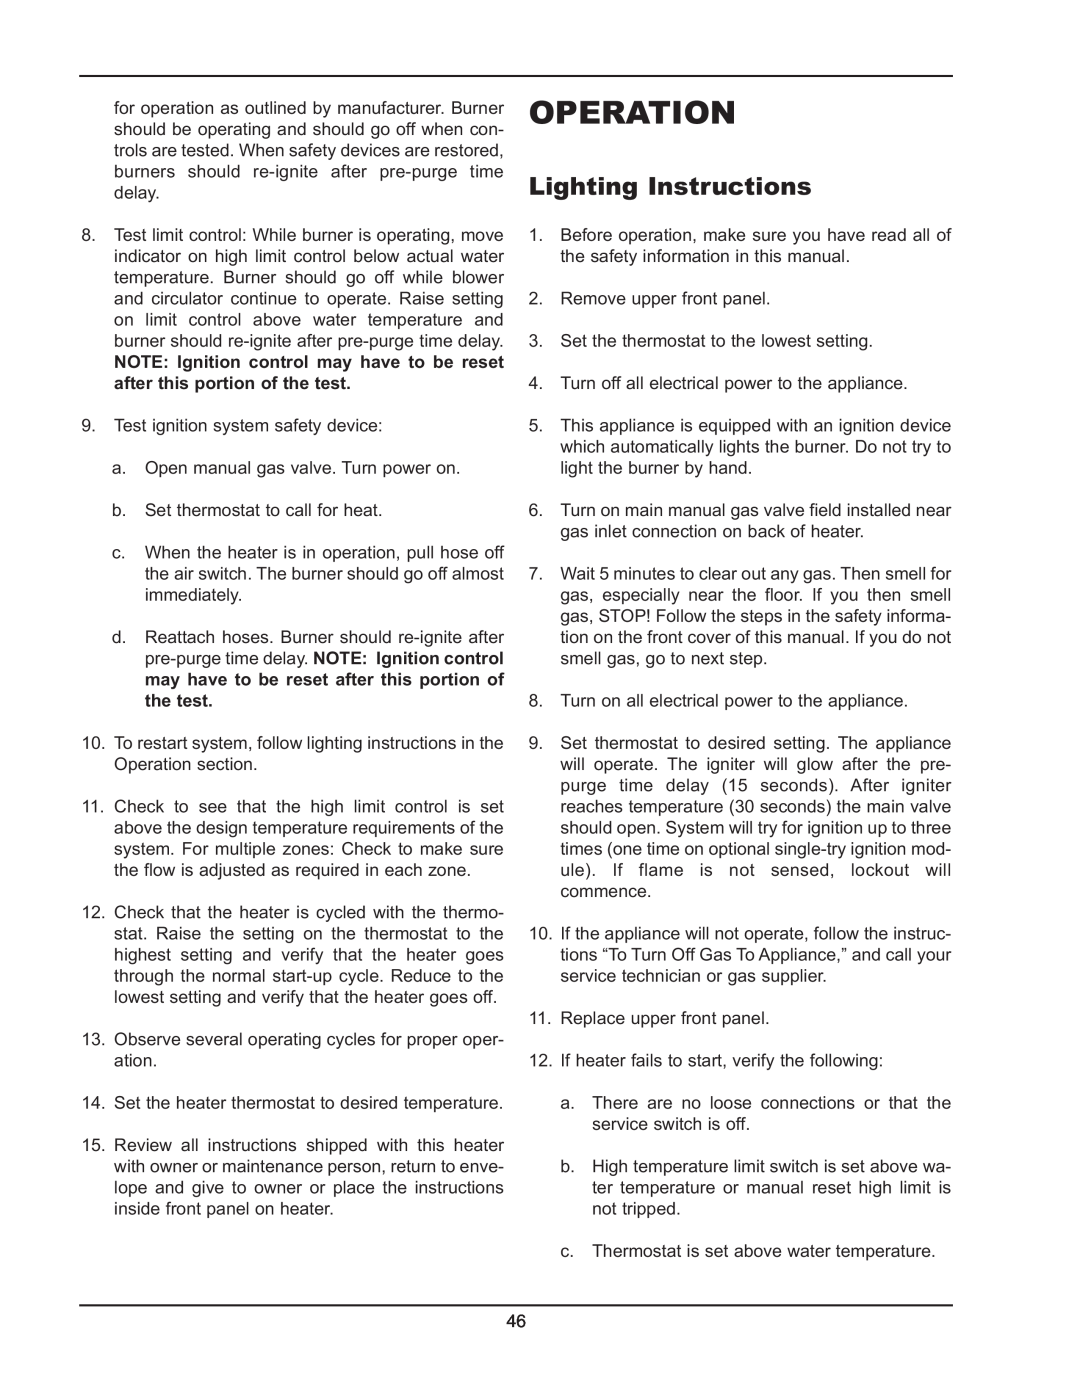 Raypak 5042004 operating instructions Operation, Lighting Instructions 